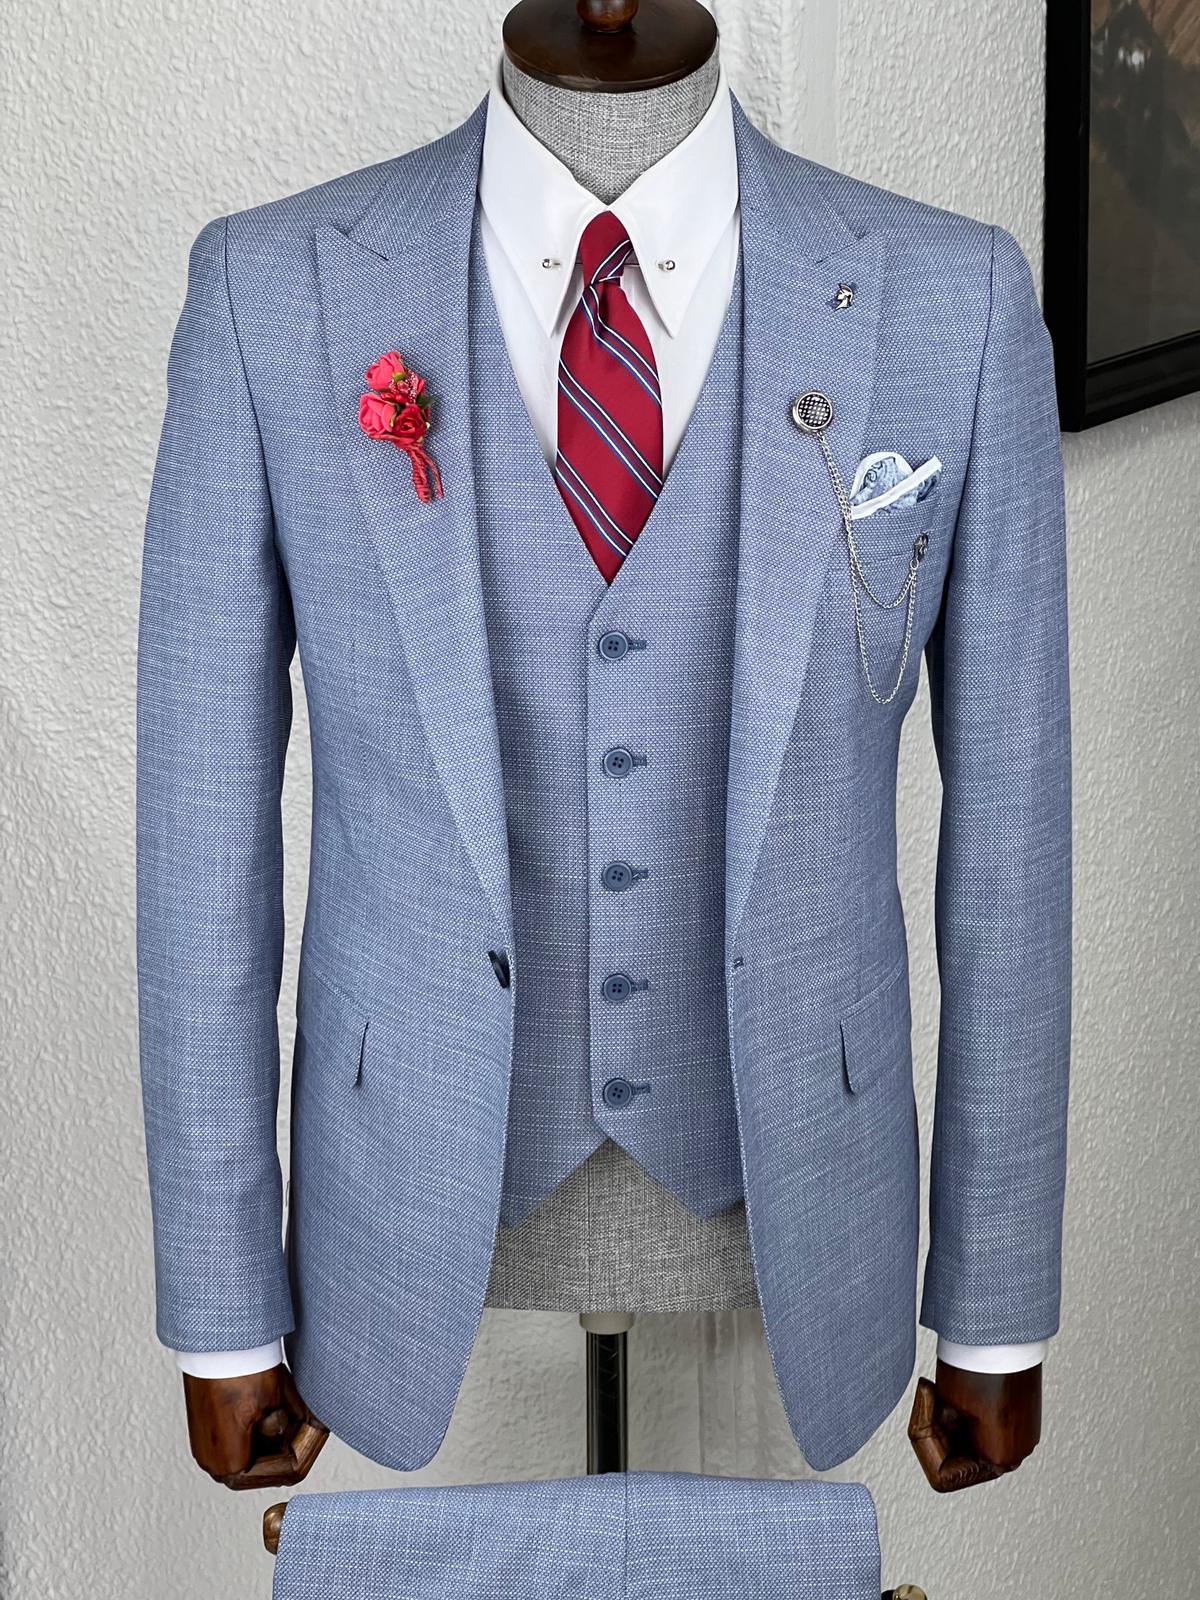 Veneta Slim Fit High Quality Self-Patterned Blue Suit